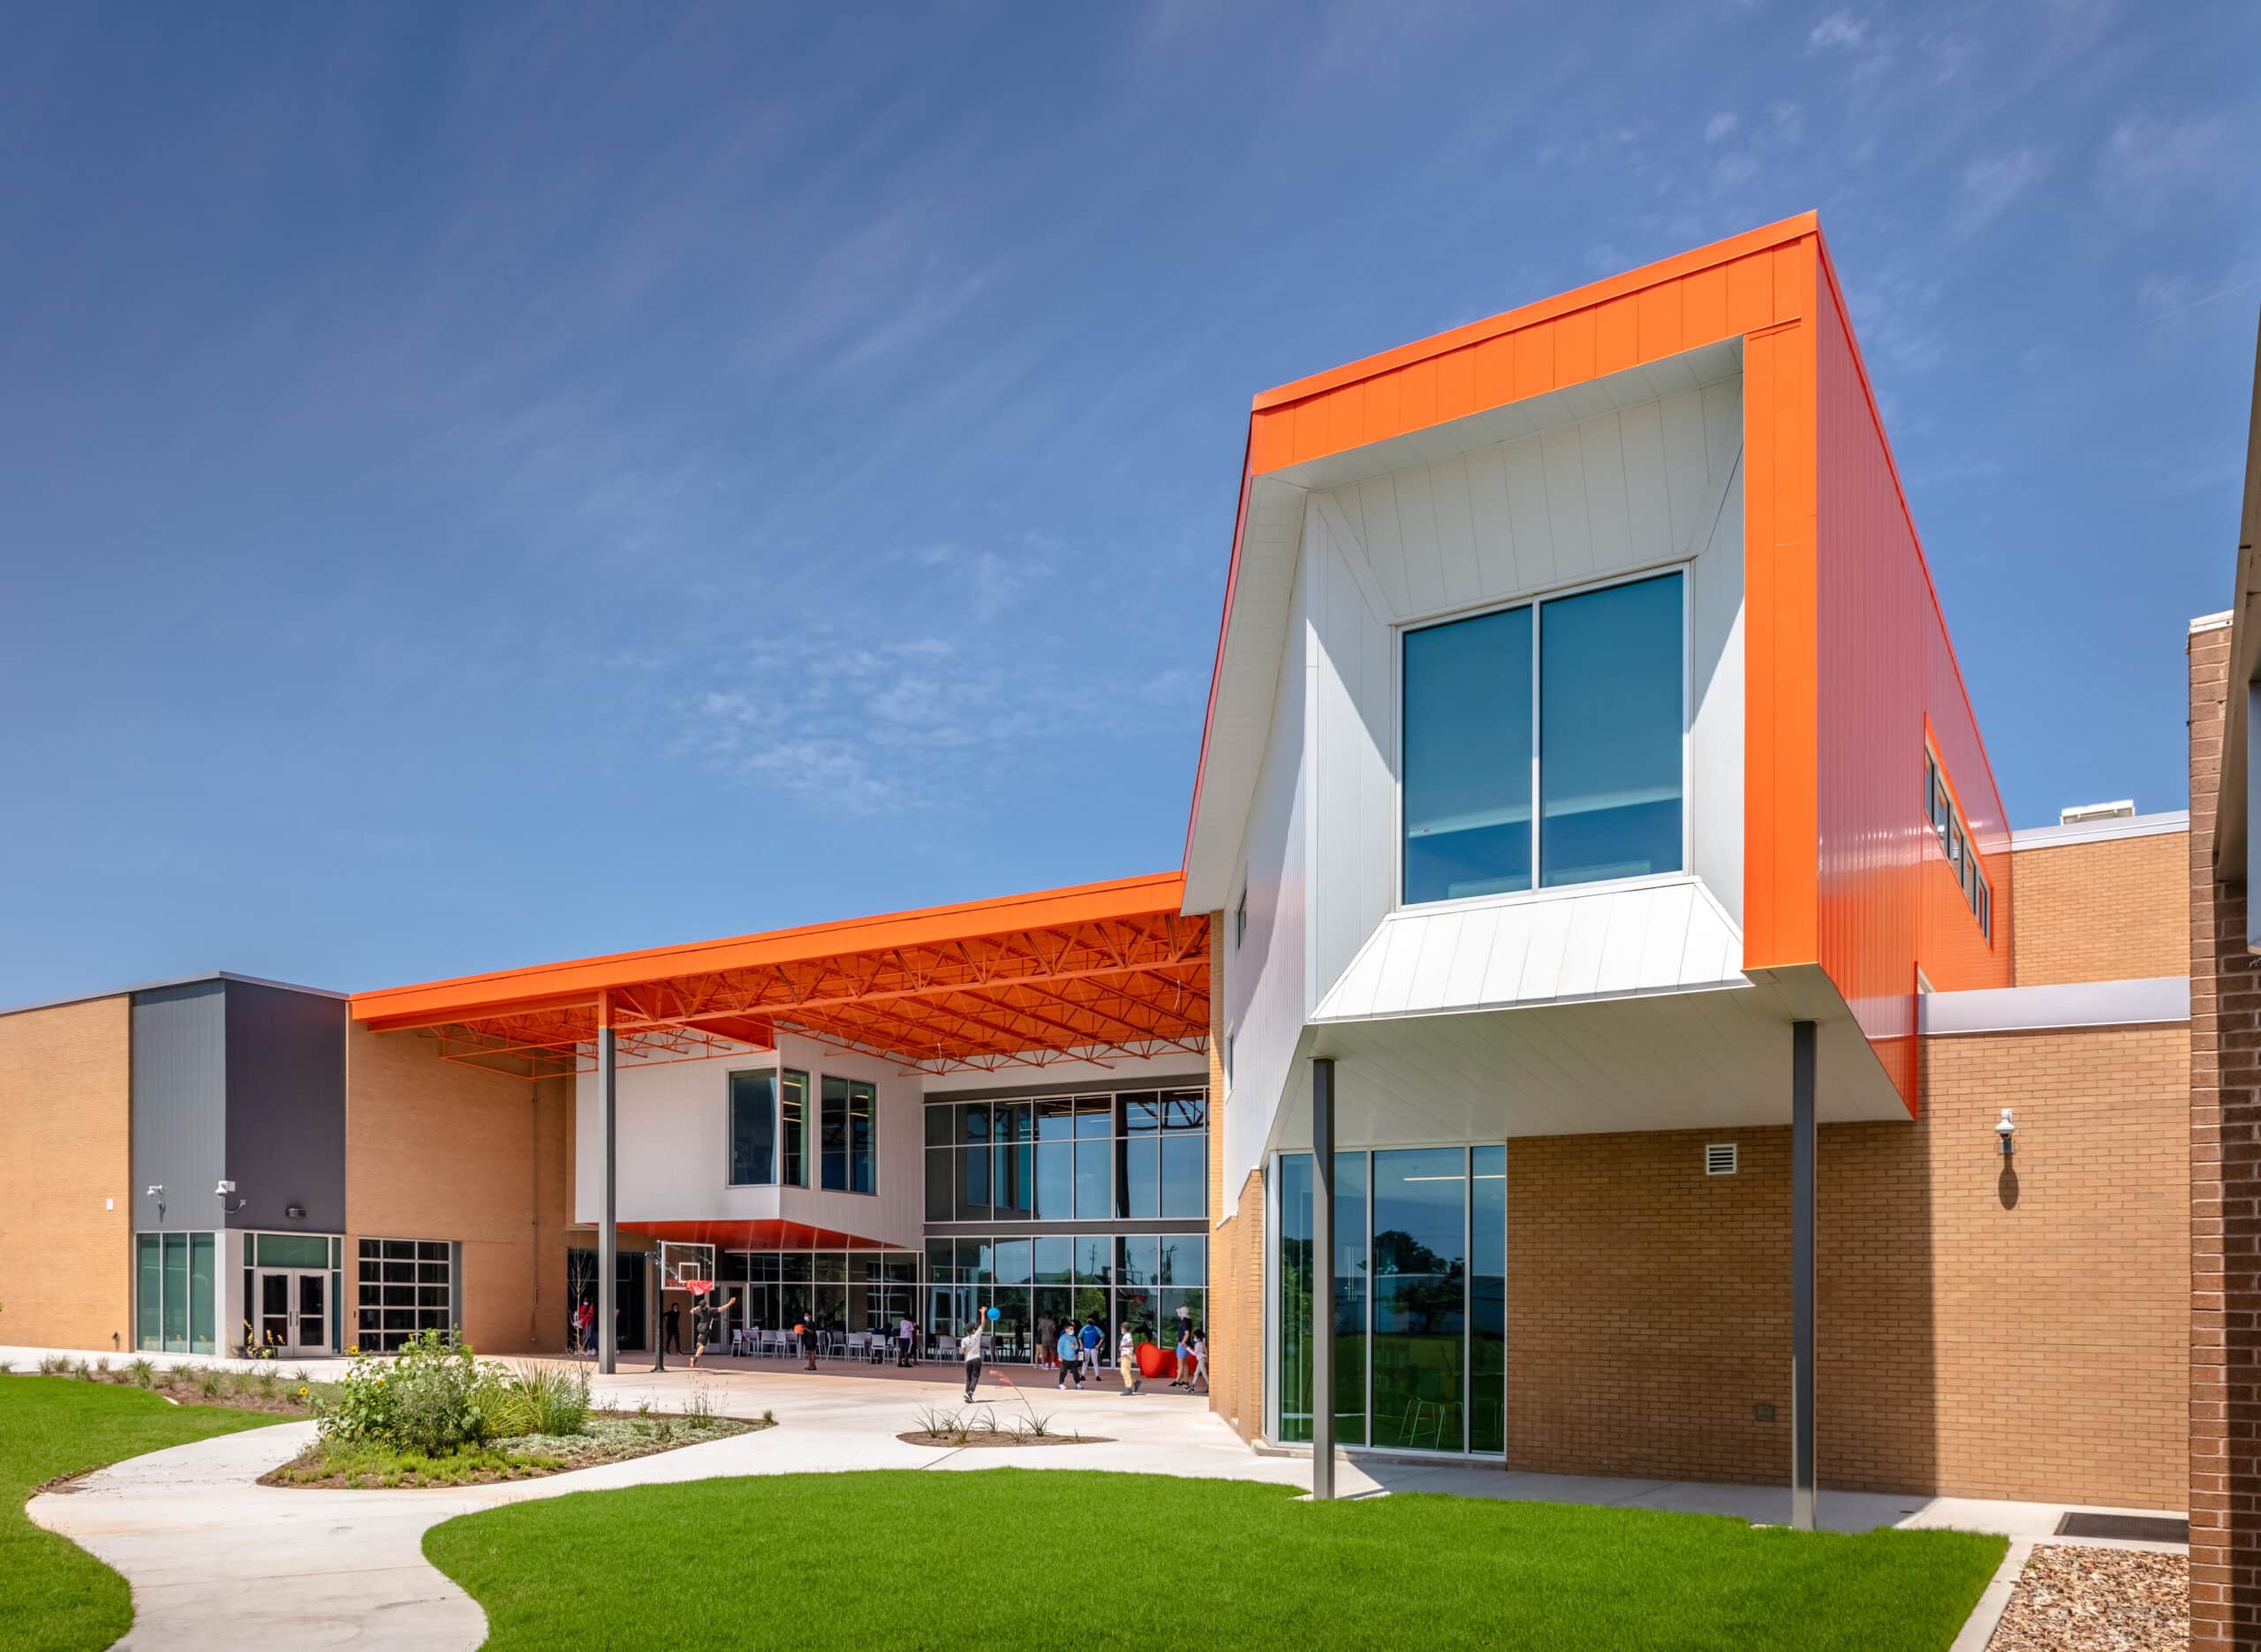 Modern school building facade with orange accents.